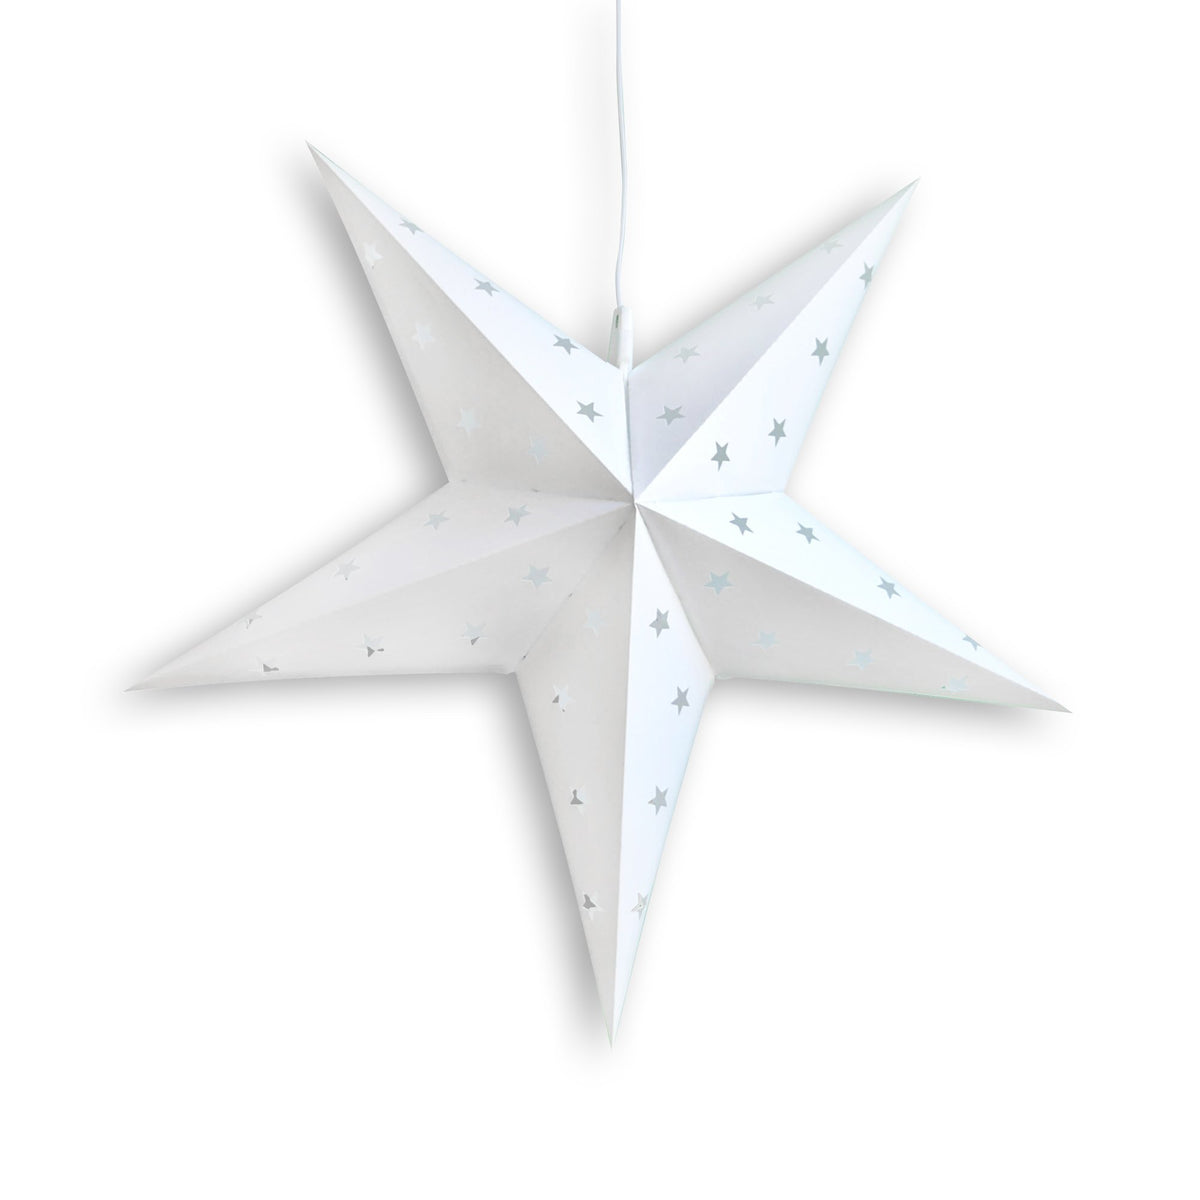 19" White Weatherproof Star Lantern Lamp, Hanging Decoration (Shade Only)